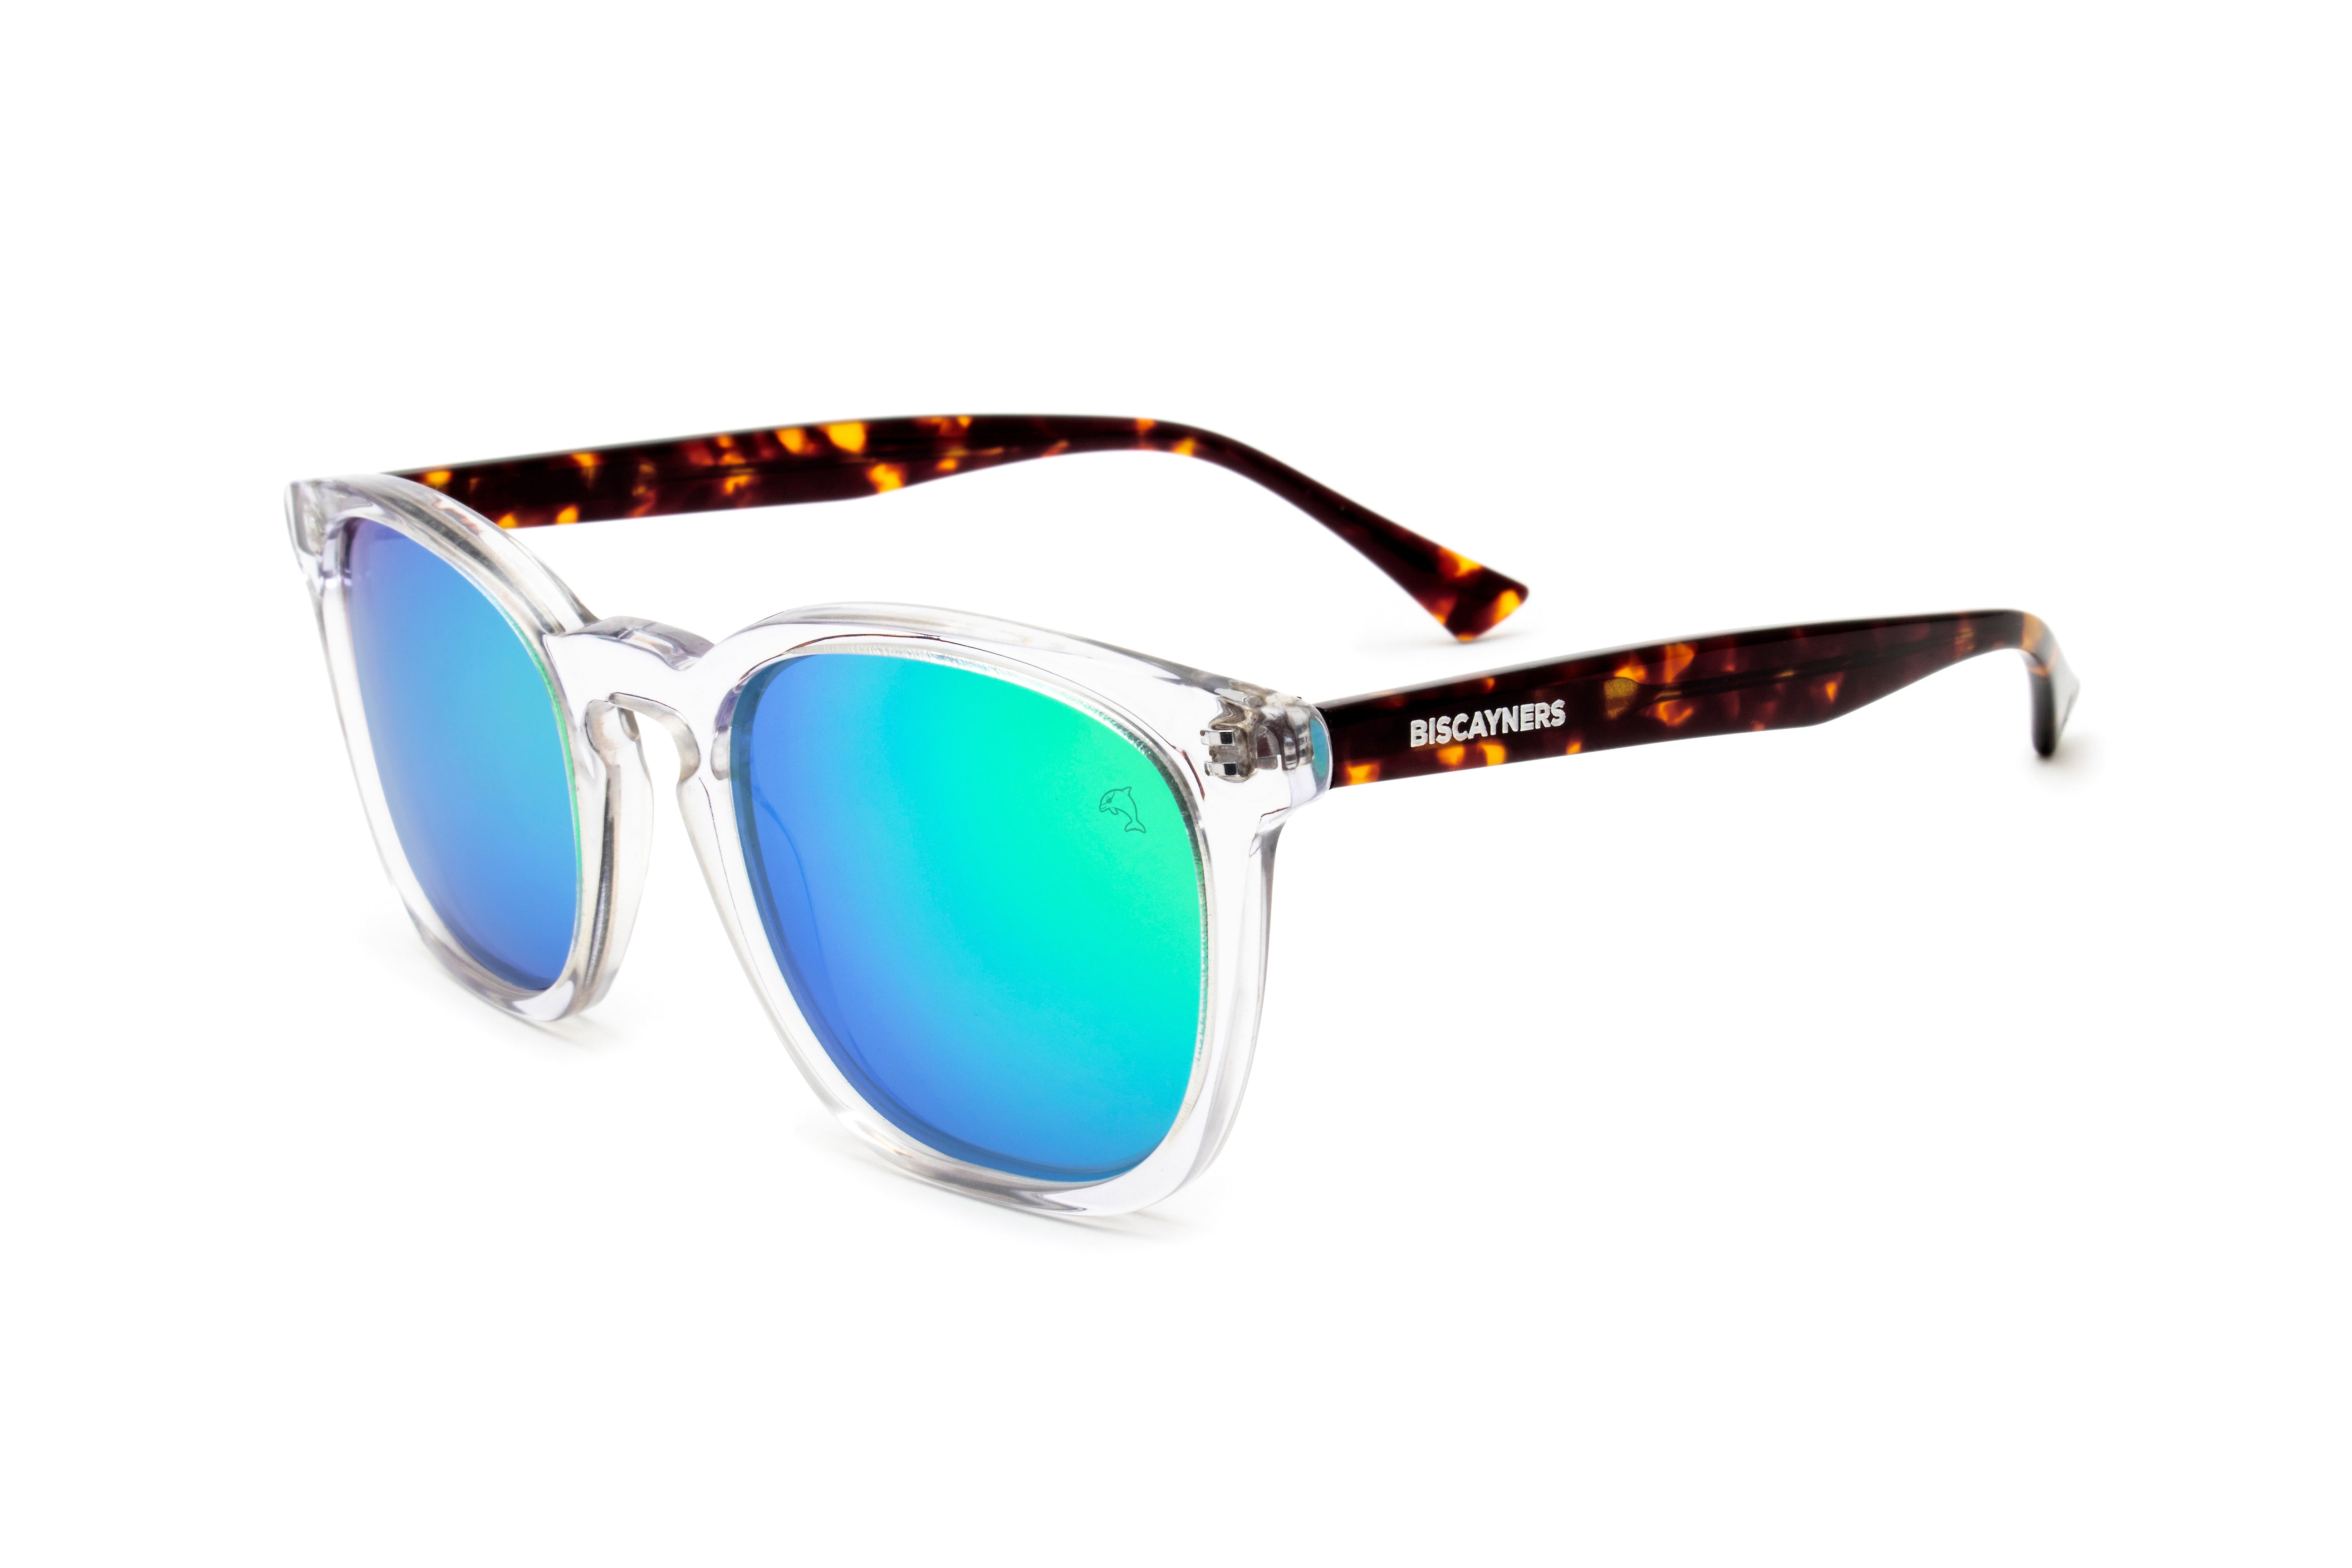 Biscayners Sunglasses | Nixon Crystal Blue